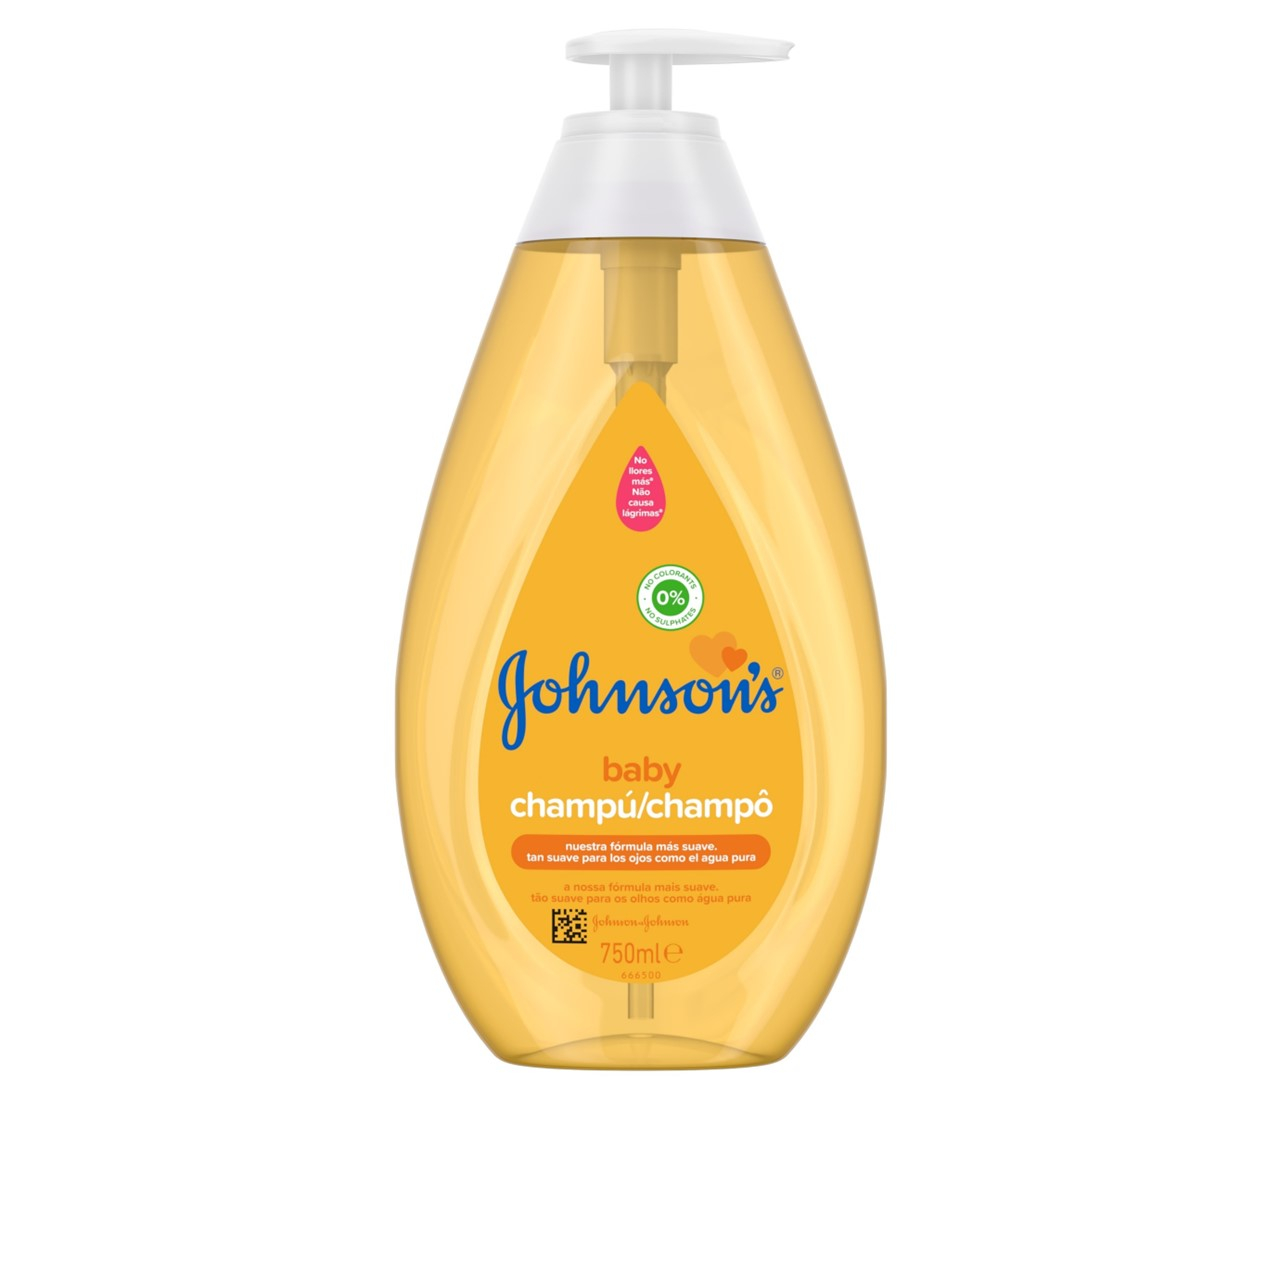 https://static.beautytocare.com/cdn-cgi/image/width=1600,height=1600,f=auto/media/catalog/product//j/o/johnson-s-baby-shampoo-with-dispenser-750ml.jpg